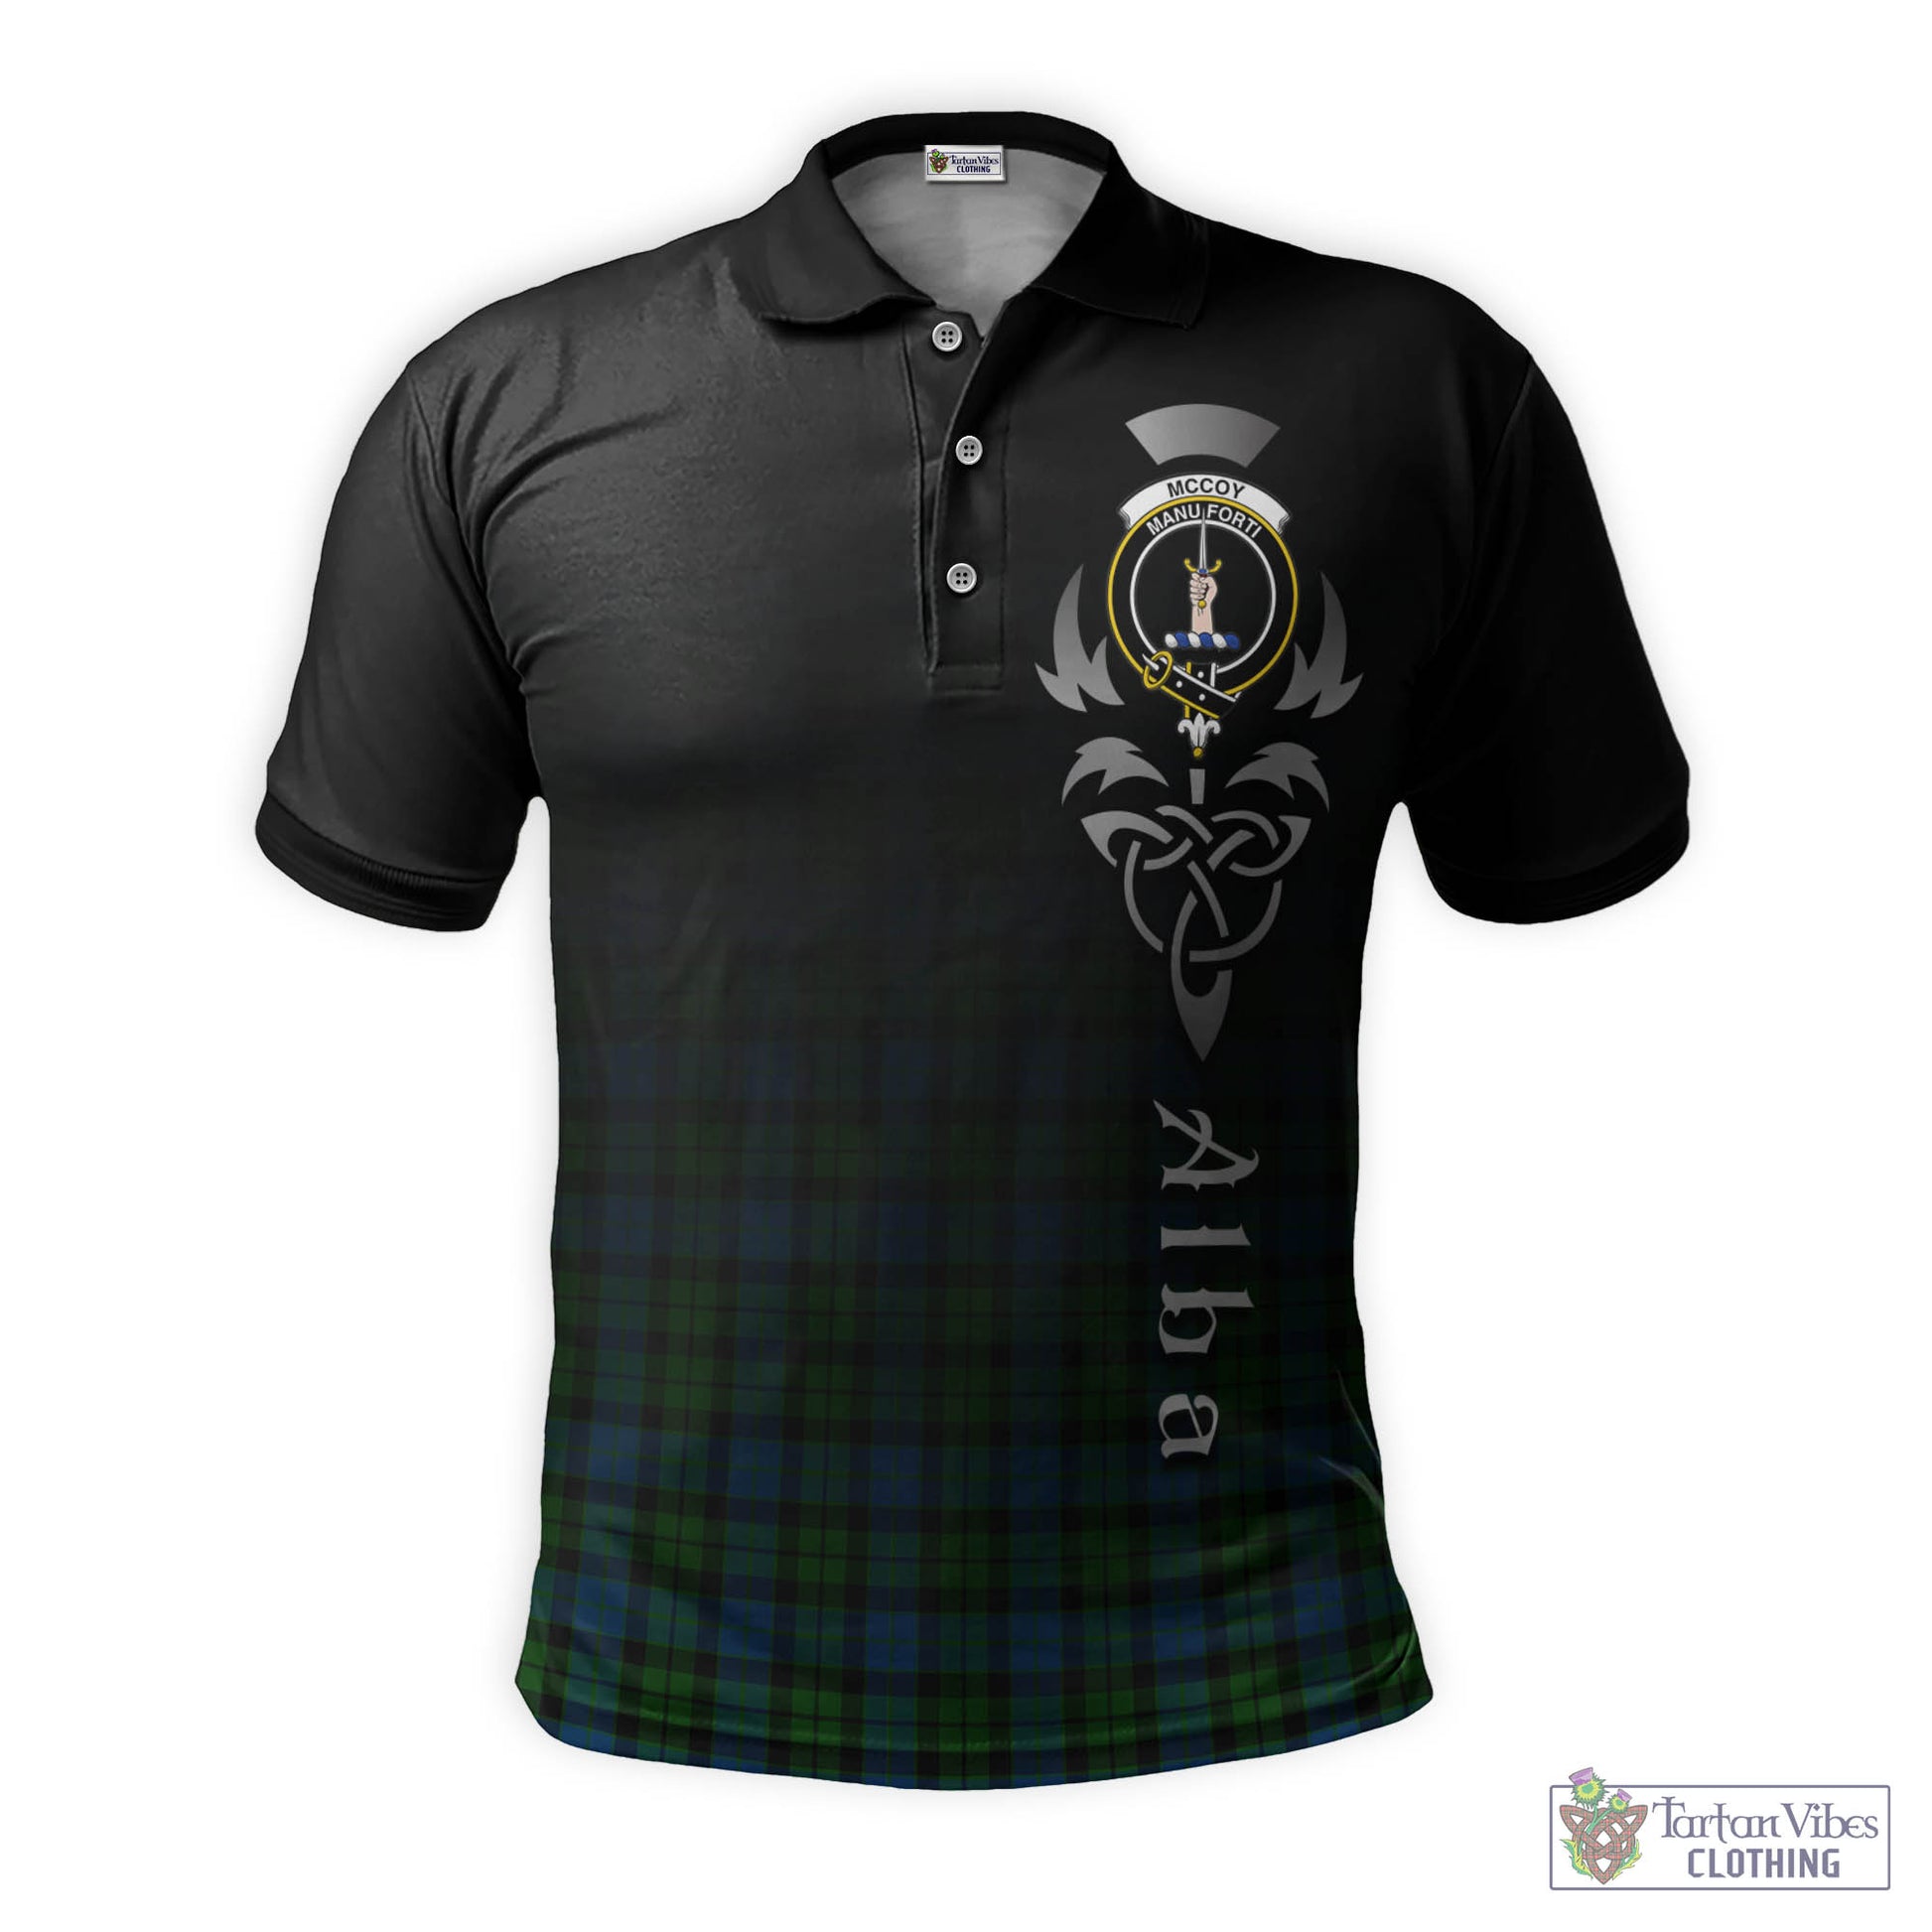 Tartan Vibes Clothing McCoy Tartan Polo Shirt Featuring Alba Gu Brath Family Crest Celtic Inspired